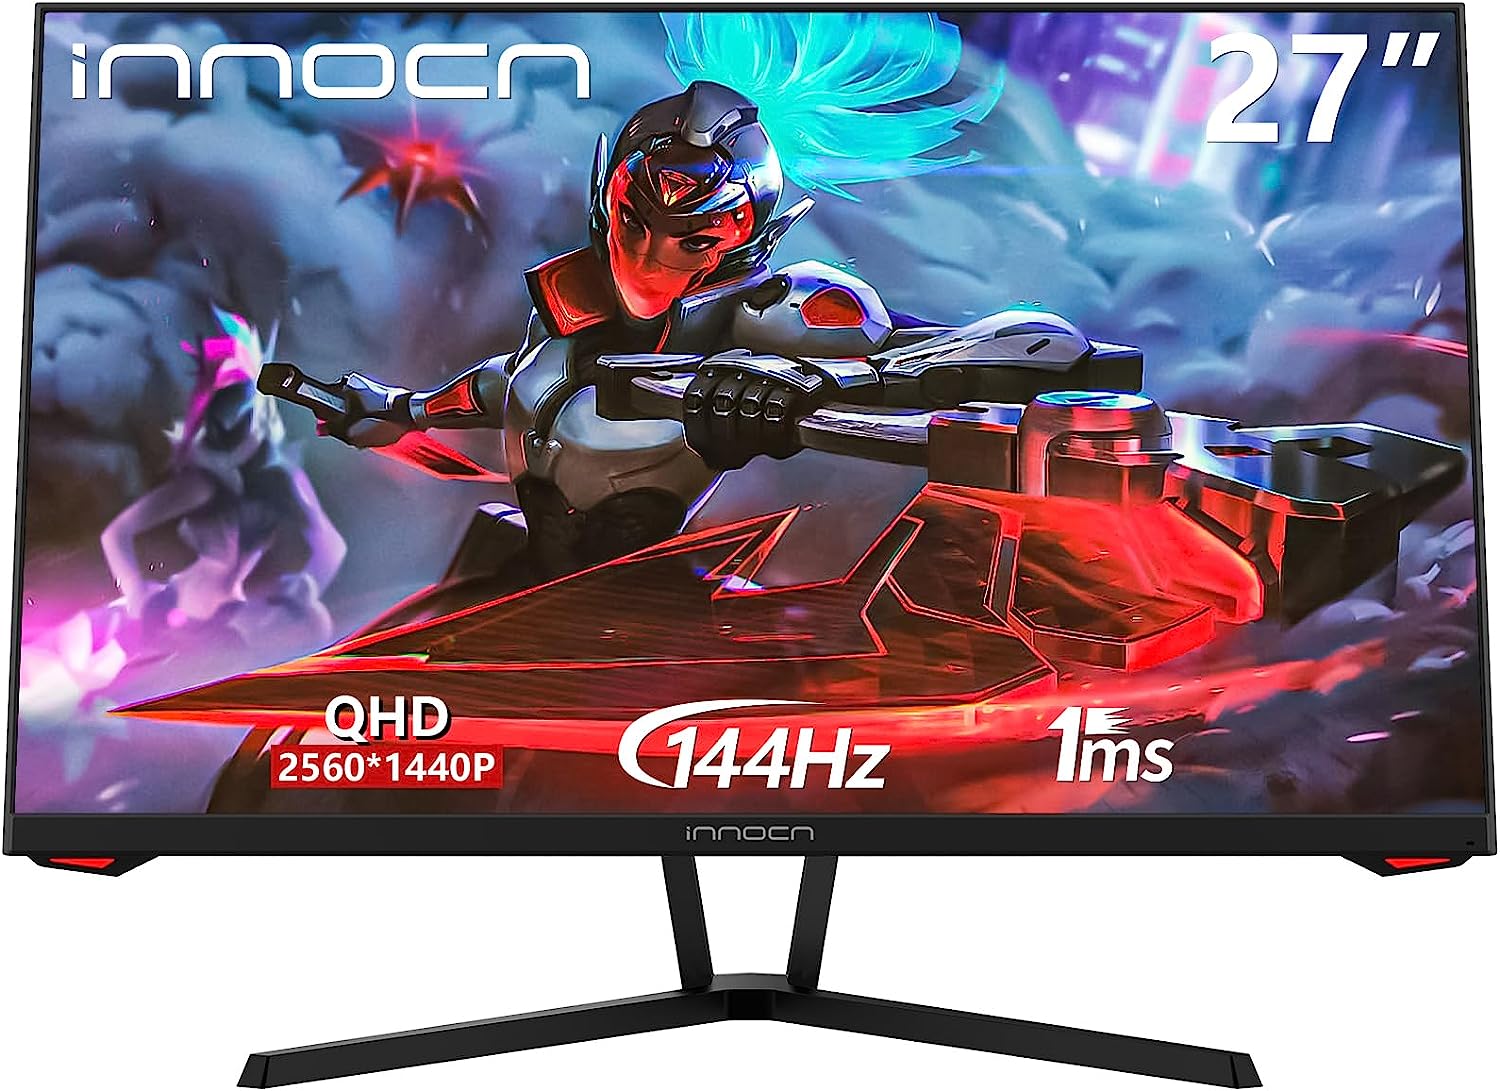 INNOCN 27G1R 27 Inch Gaming Monitor 1440P 144Hz 2K QHD [...]